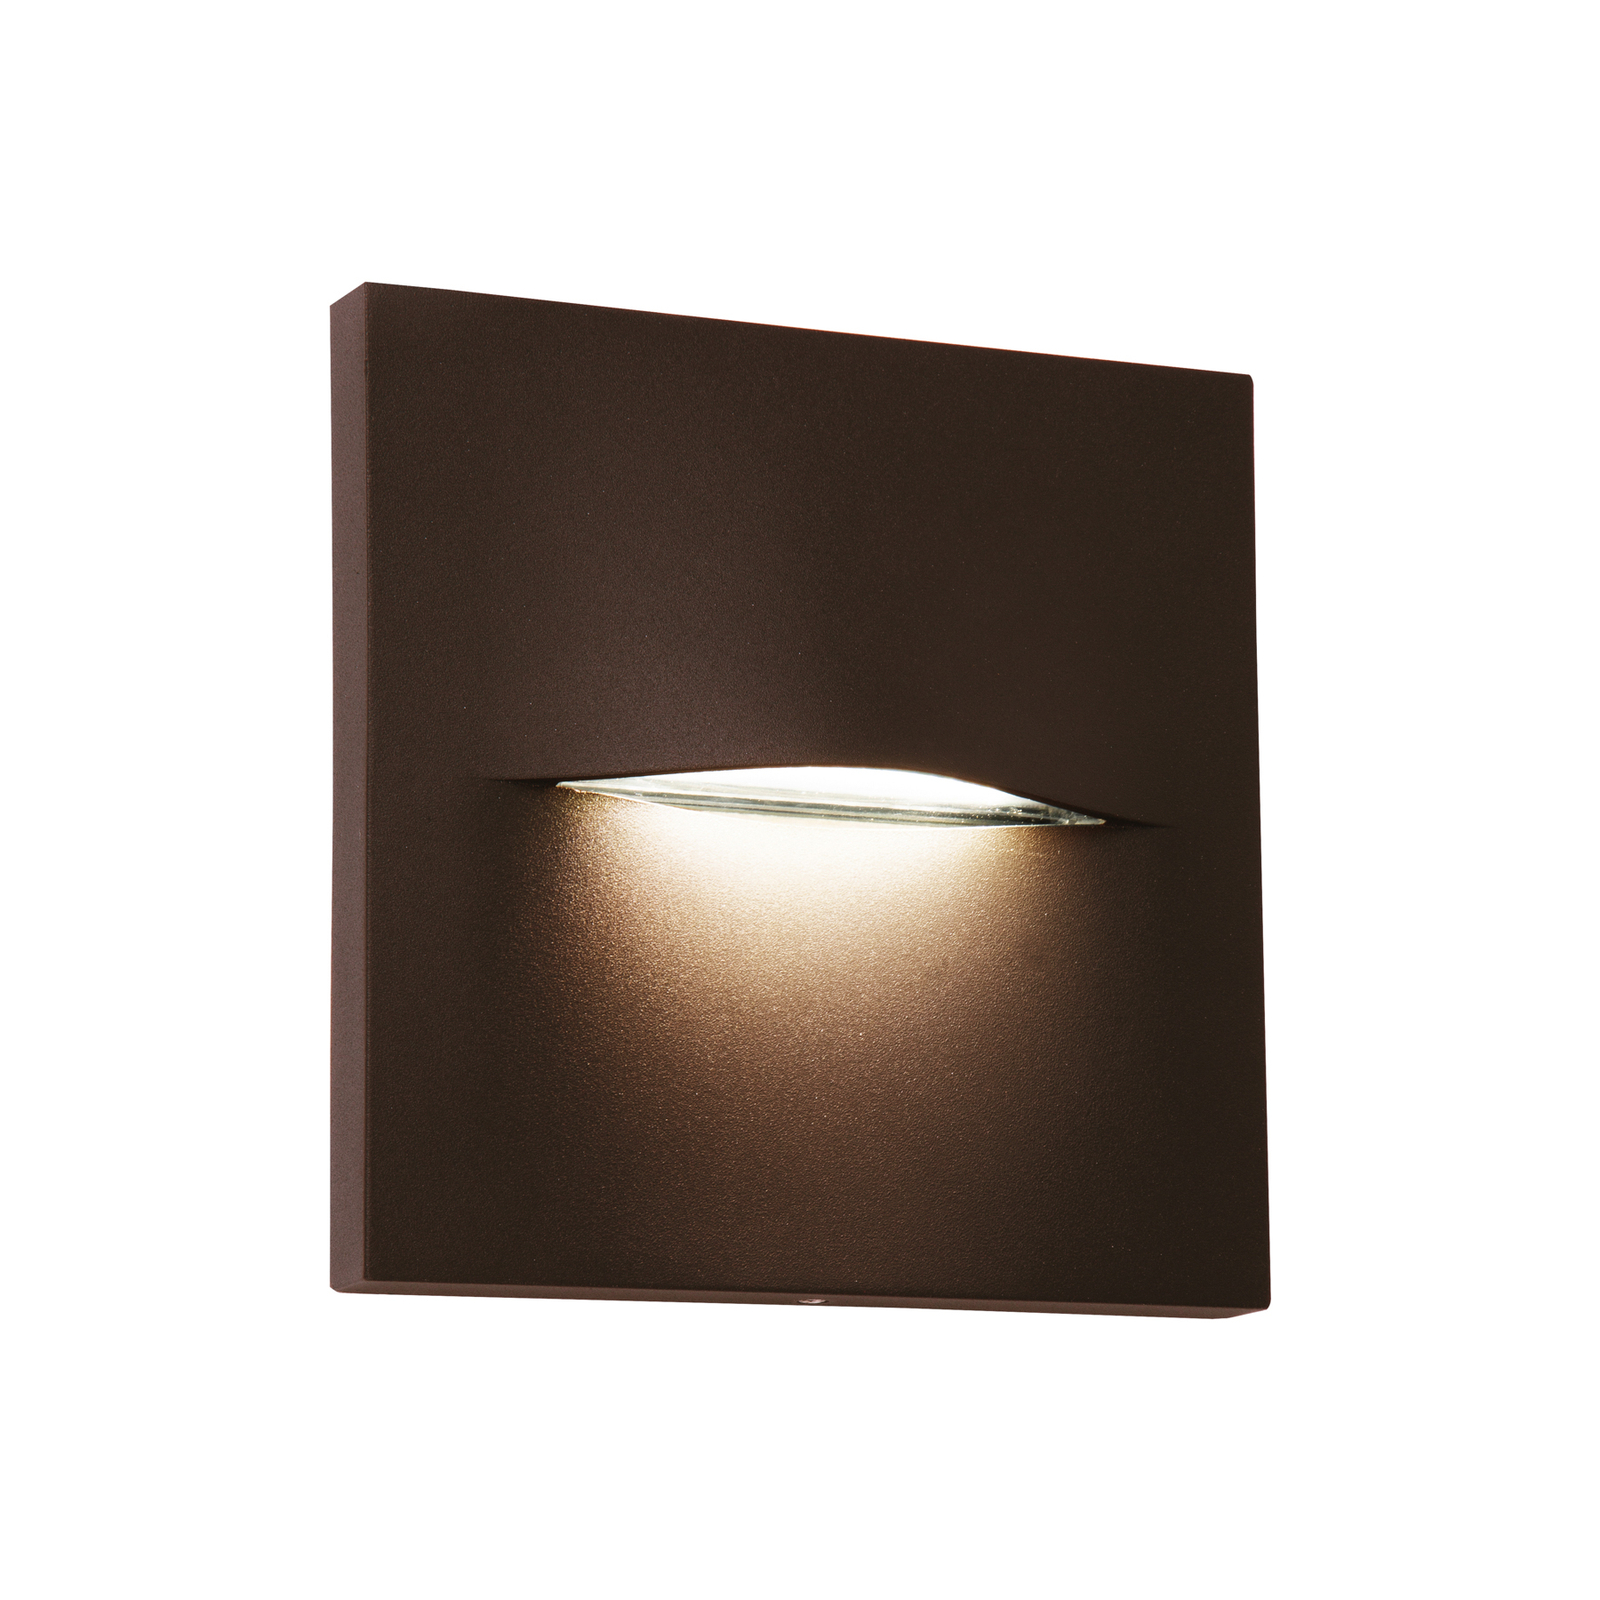 LED outdoor wall light Vita, rust brown, 14 x 14 cm